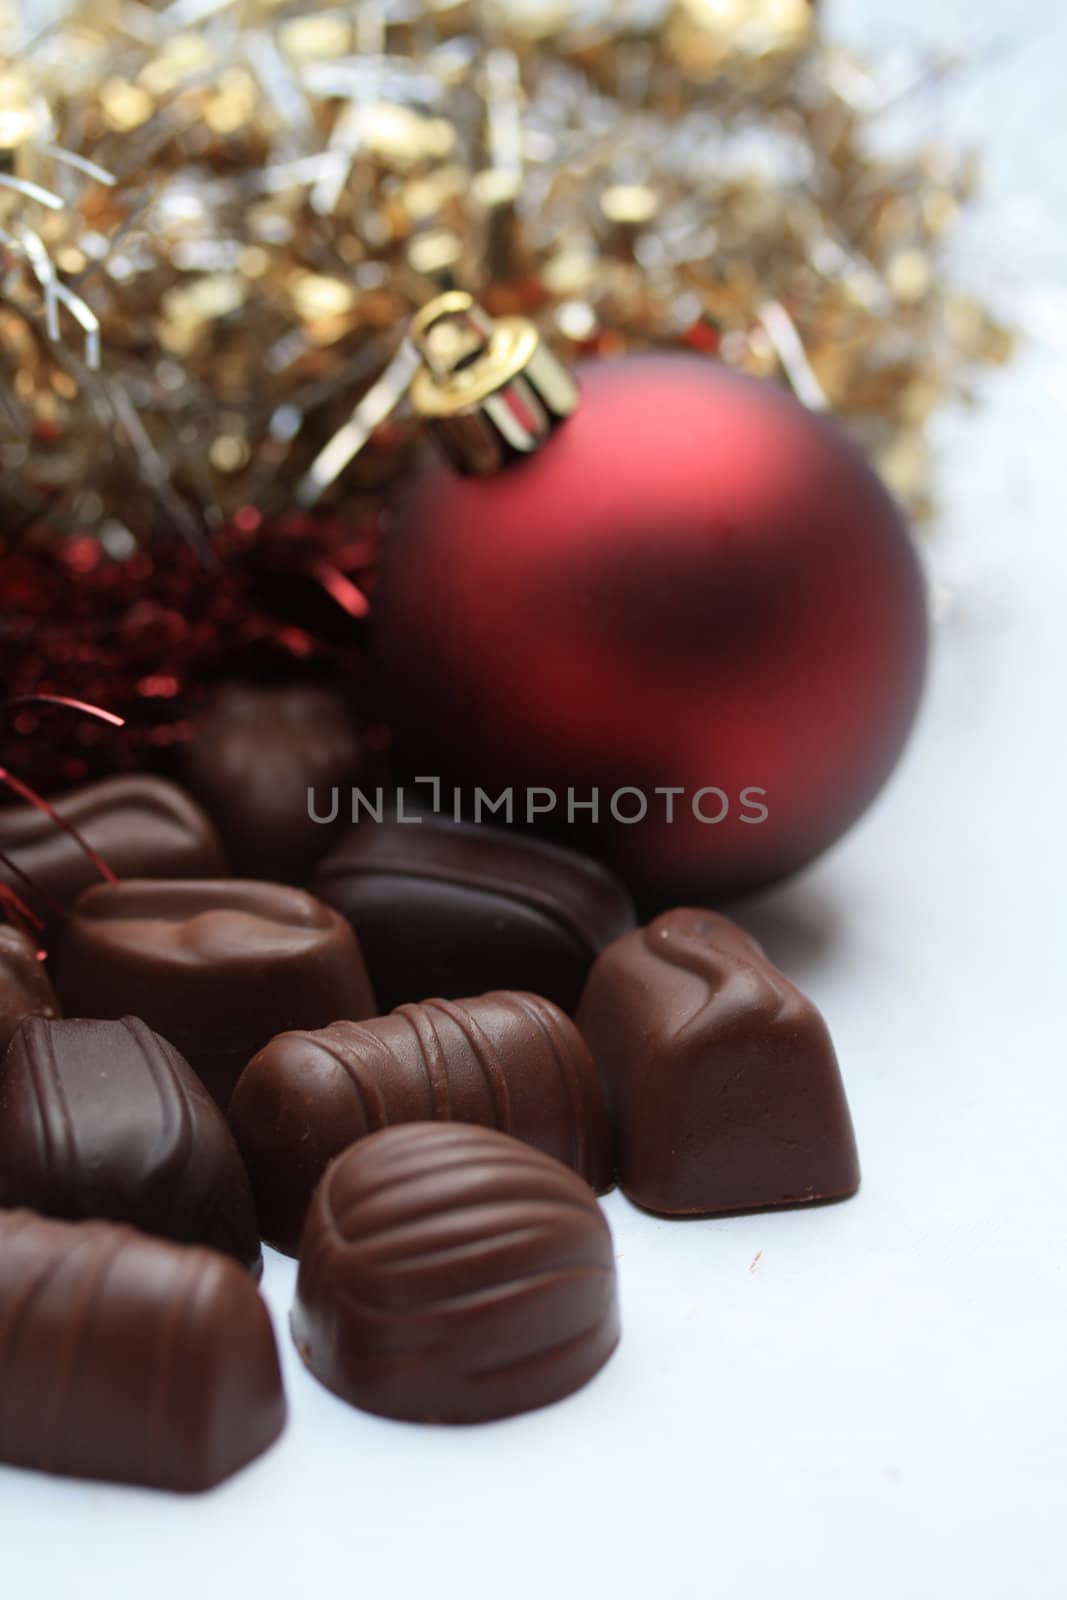 Handmade belgium chocolates and christmas ornament